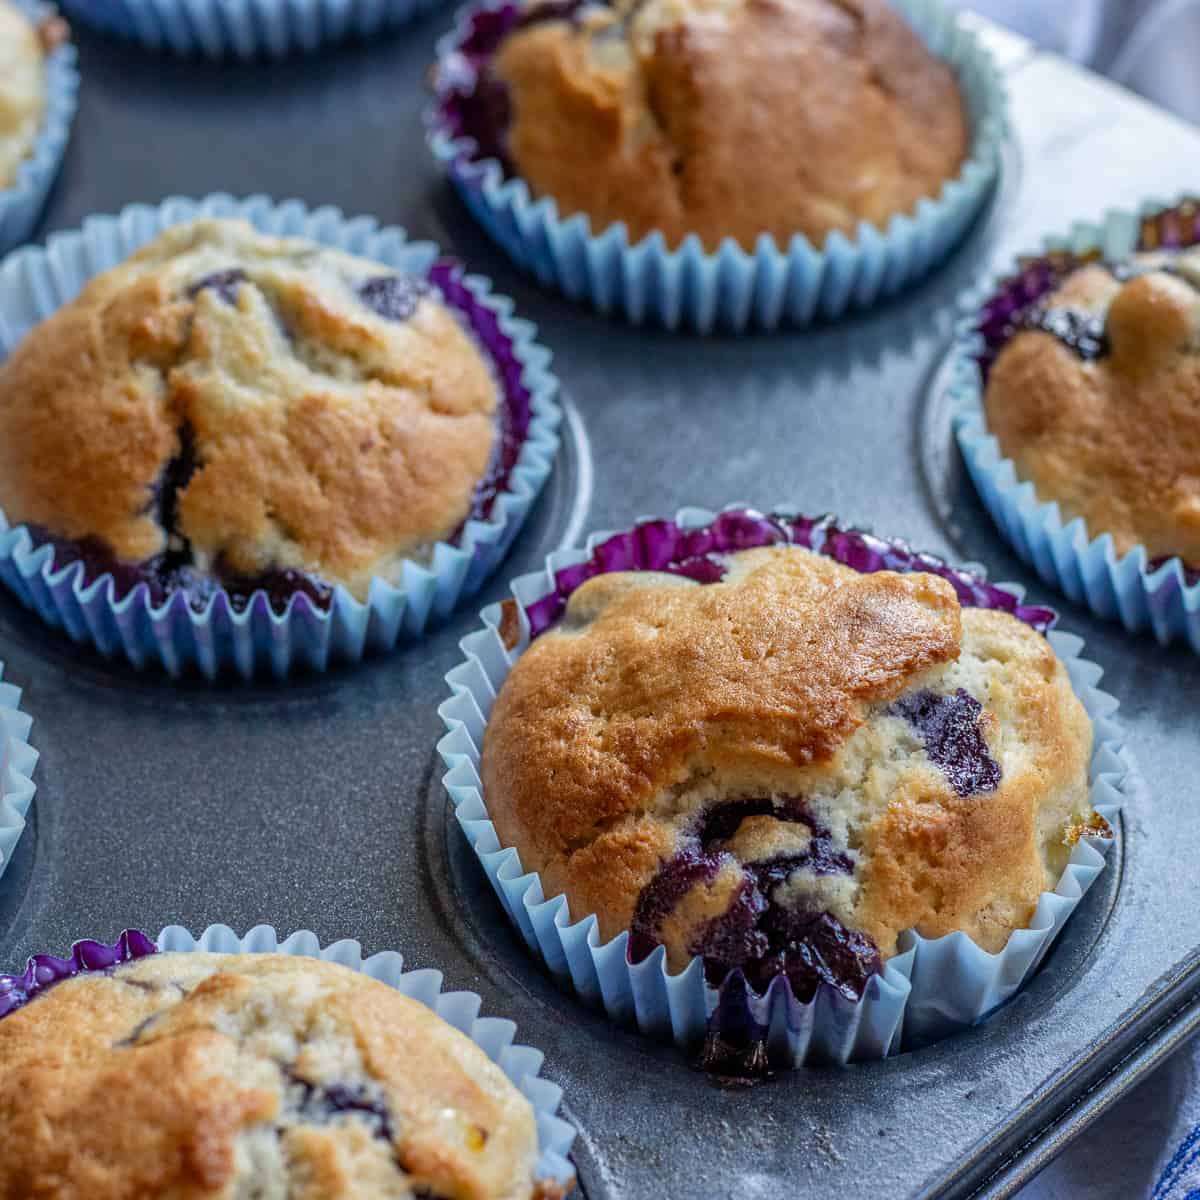 Banana Blueberry Muffins with Yogurt